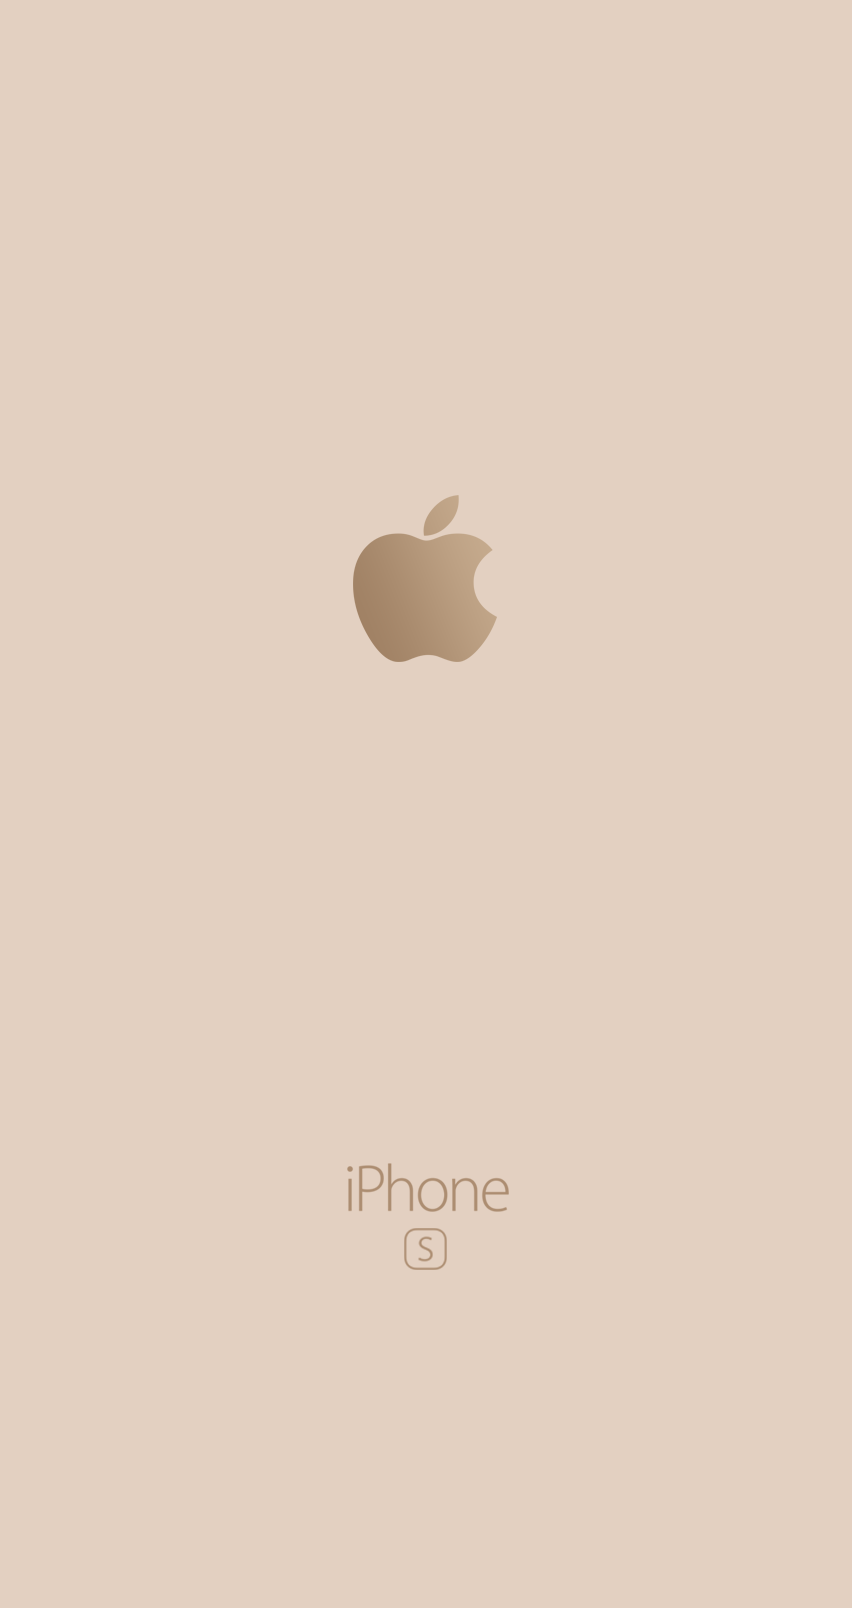 iPhone 6s Wallpaper gold logo apple fond d'écran or. おしゃれな壁紙背景, iPhone 用壁紙, ホーム画面 壁紙